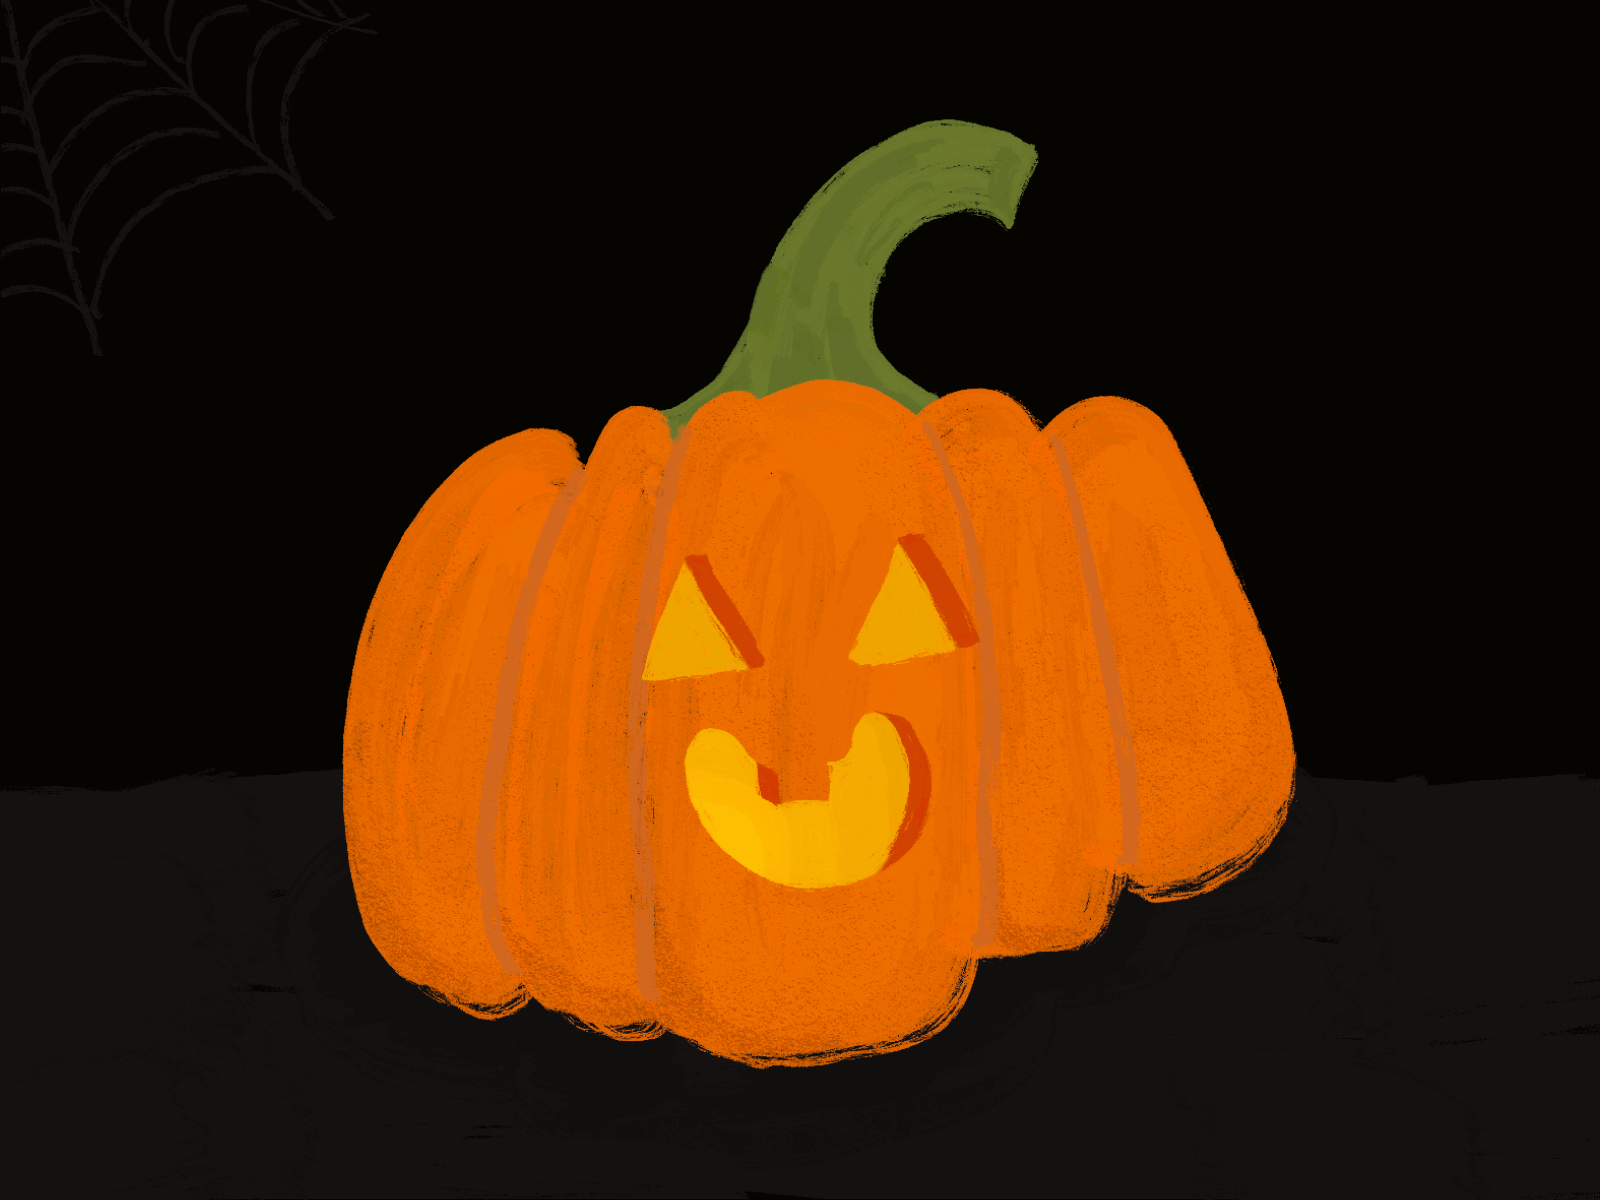 A pumpkin named Franky